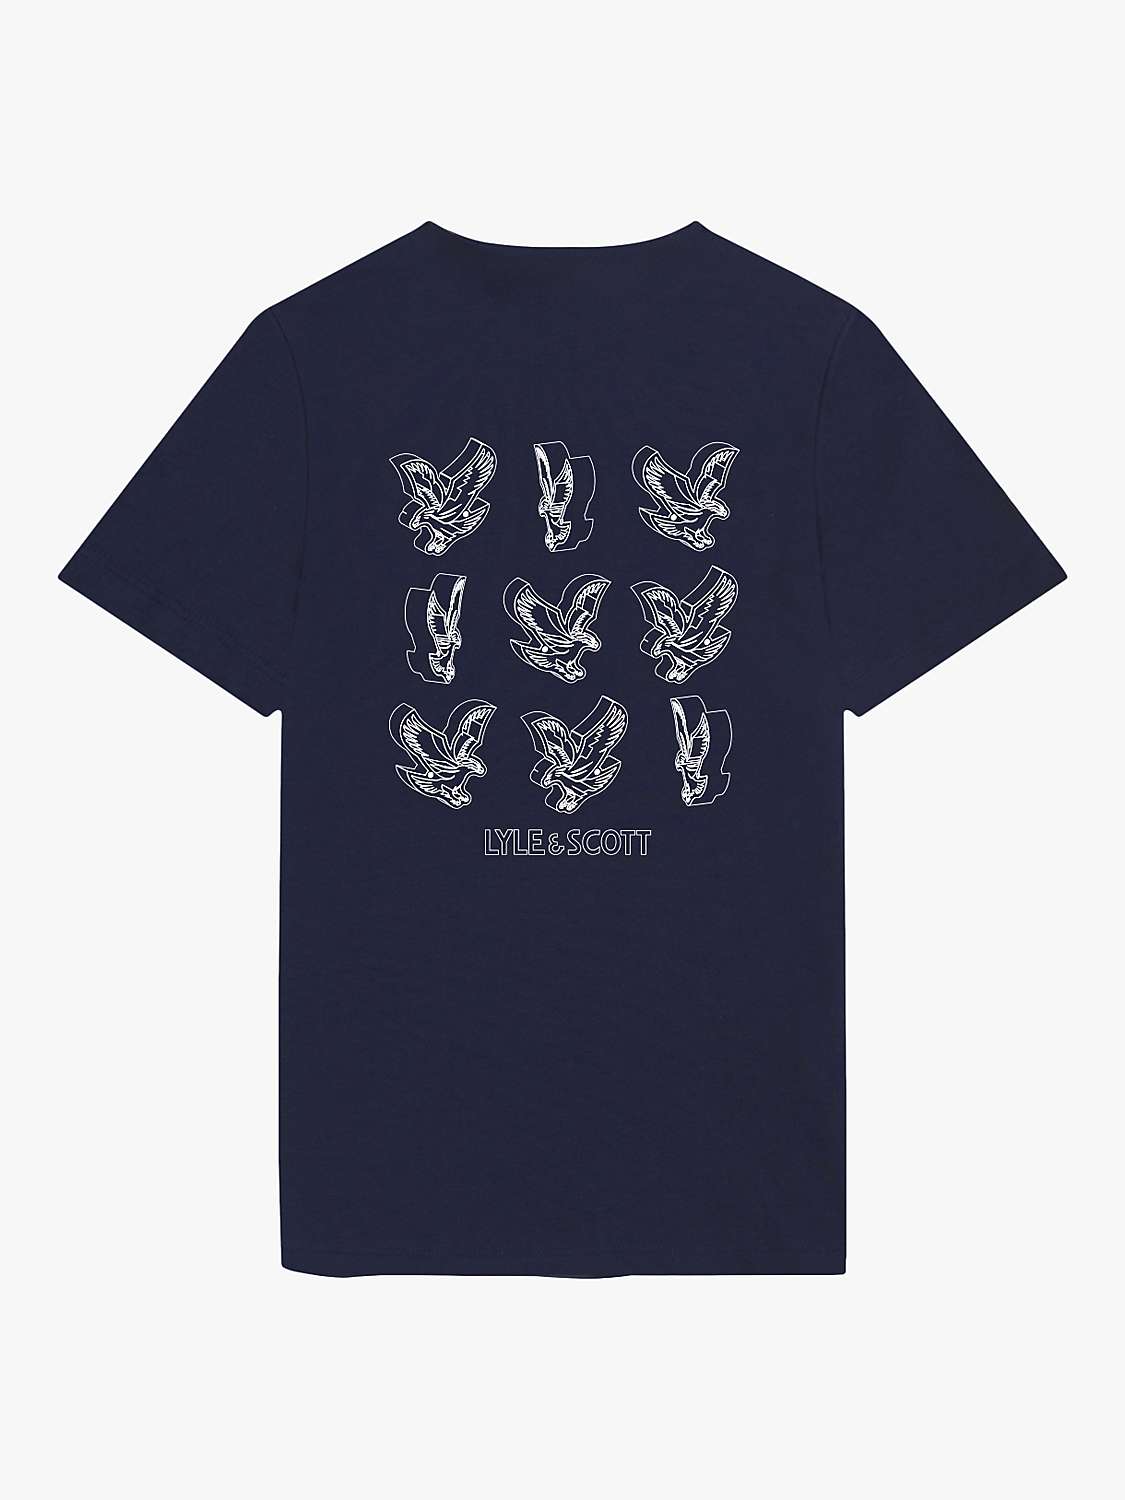 Buy Lyle & Scott Kids' 3D Eagle Graphic T-Shirt, Navy Online at johnlewis.com